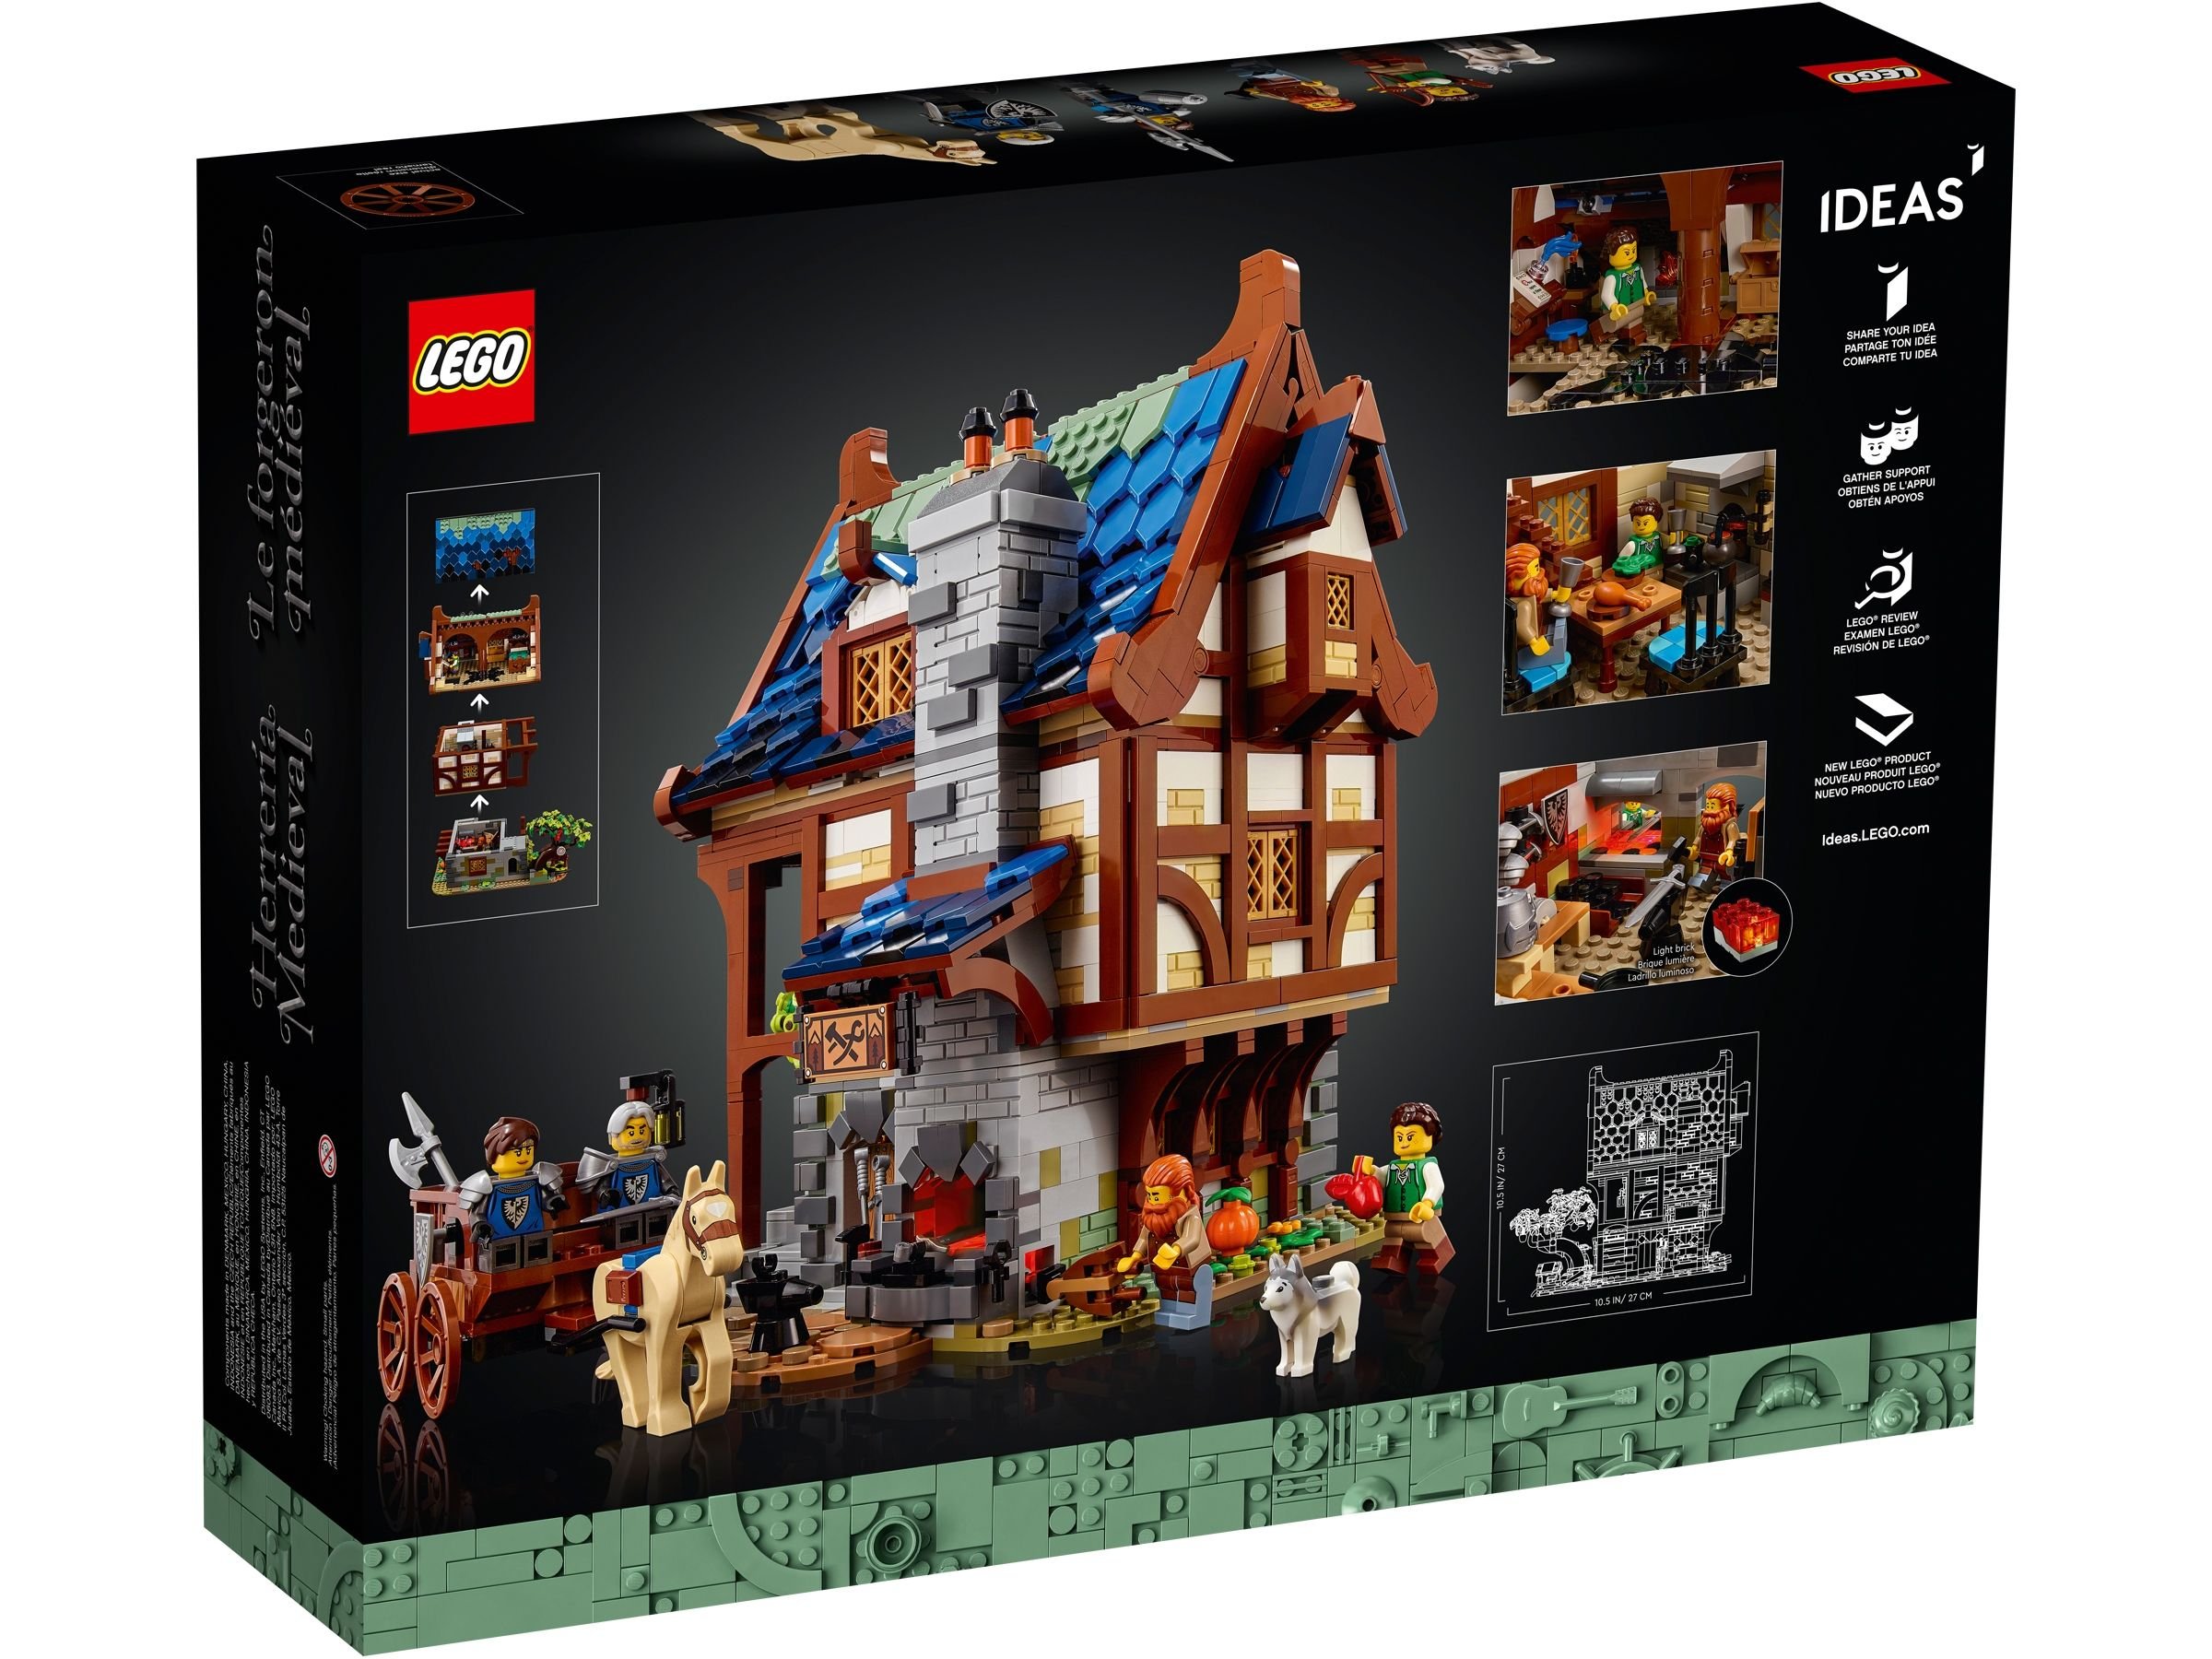 LEGO Ideas 21325 Mittelalterliche Schmiede LEGO_21325_Box5_v39_2400.jpg